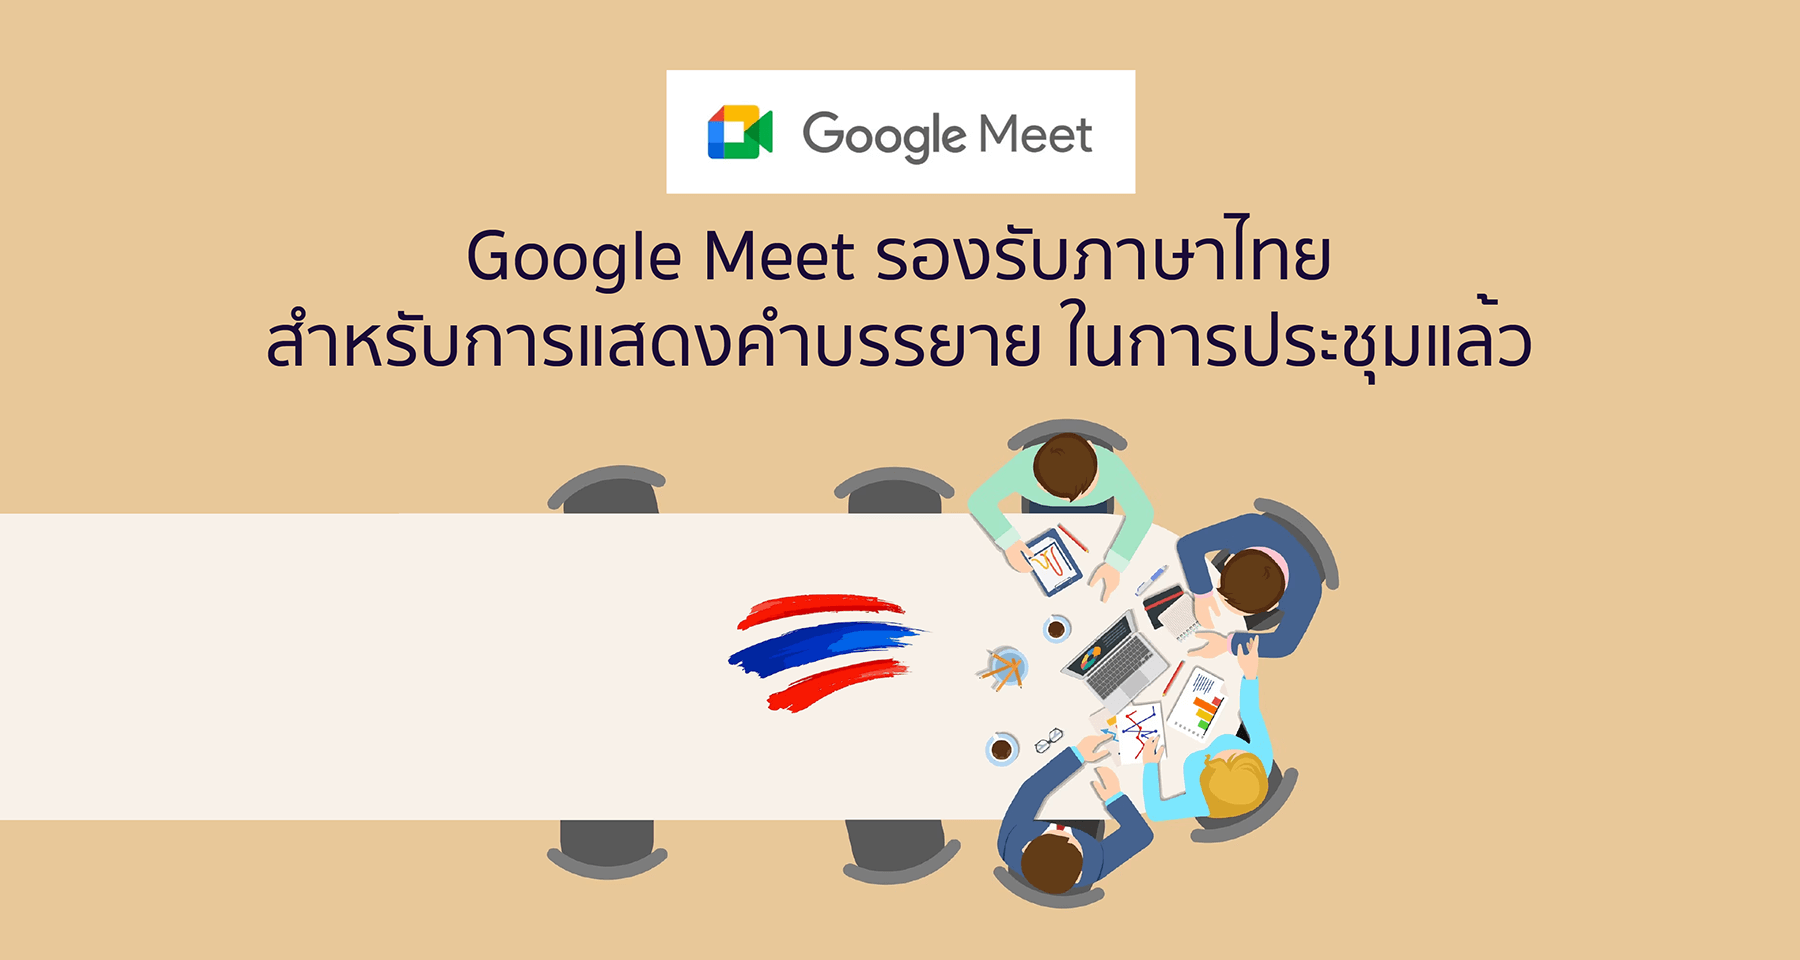 Google Meet รองรับภาษาไทยสำหรับการแสดงคำบรรยาย ในการประชุมแล้ว